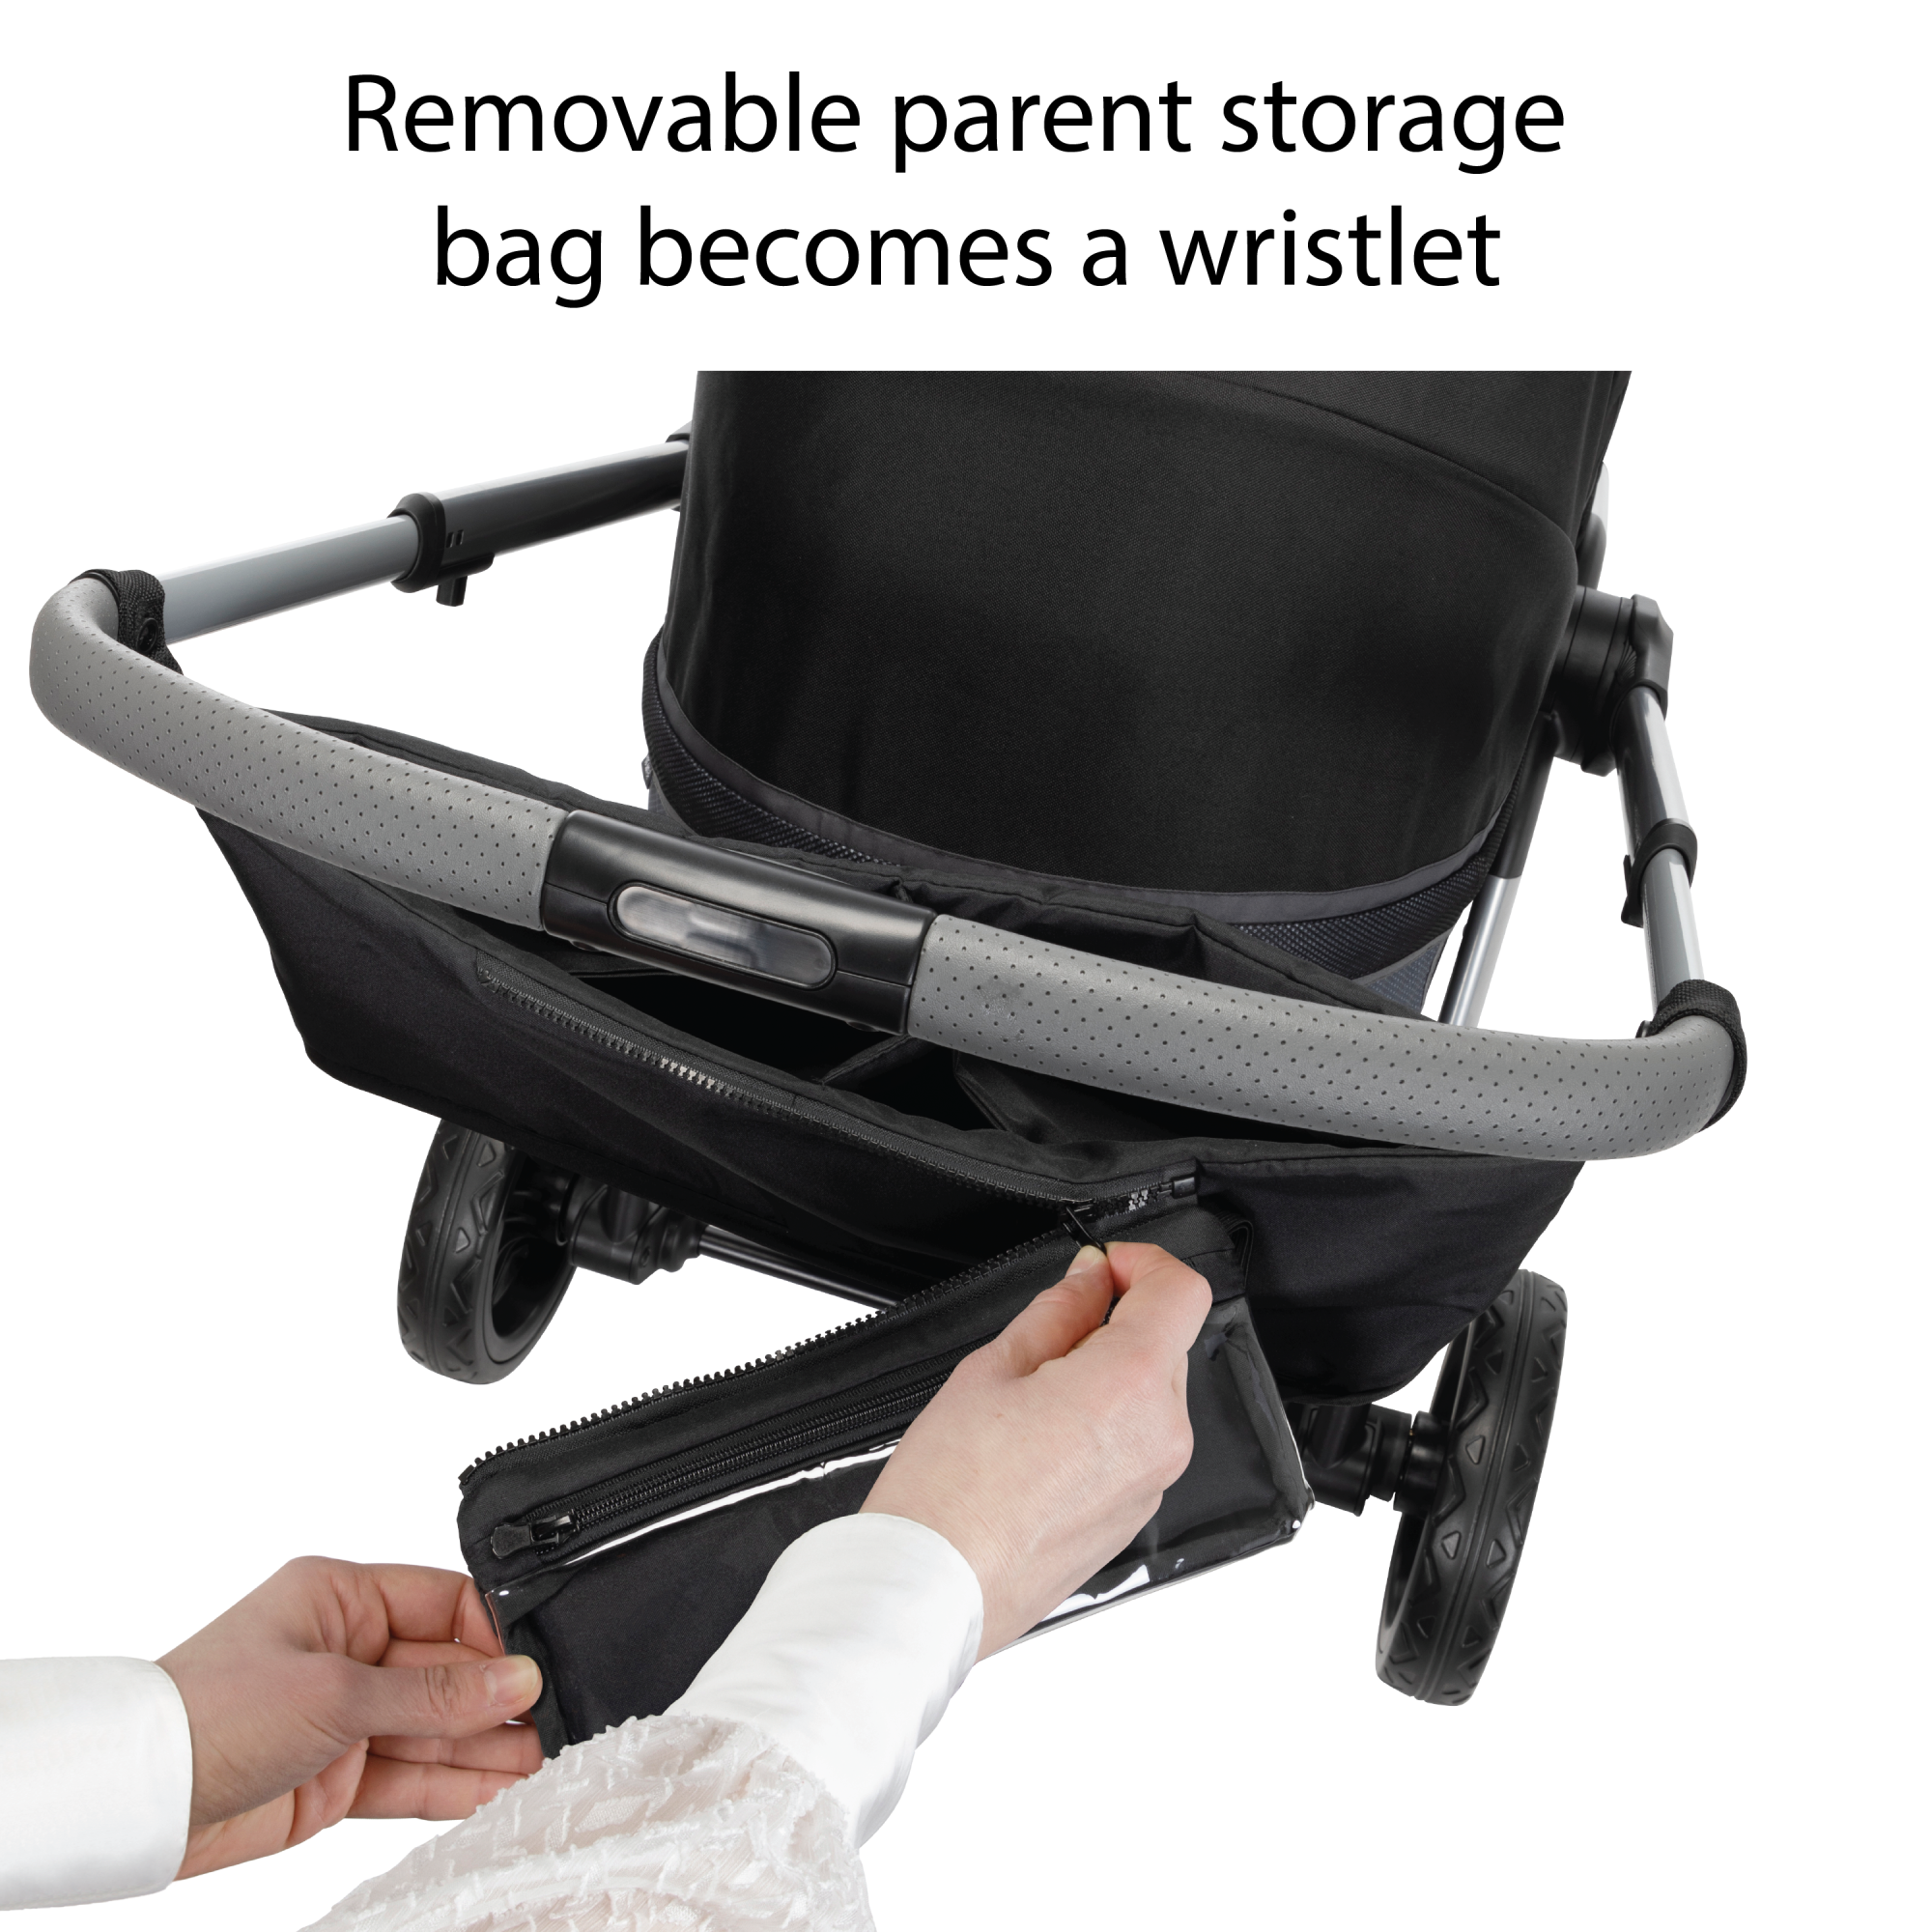 Summit Wagon Stroller - removable parent storage bag becomes a wristlet